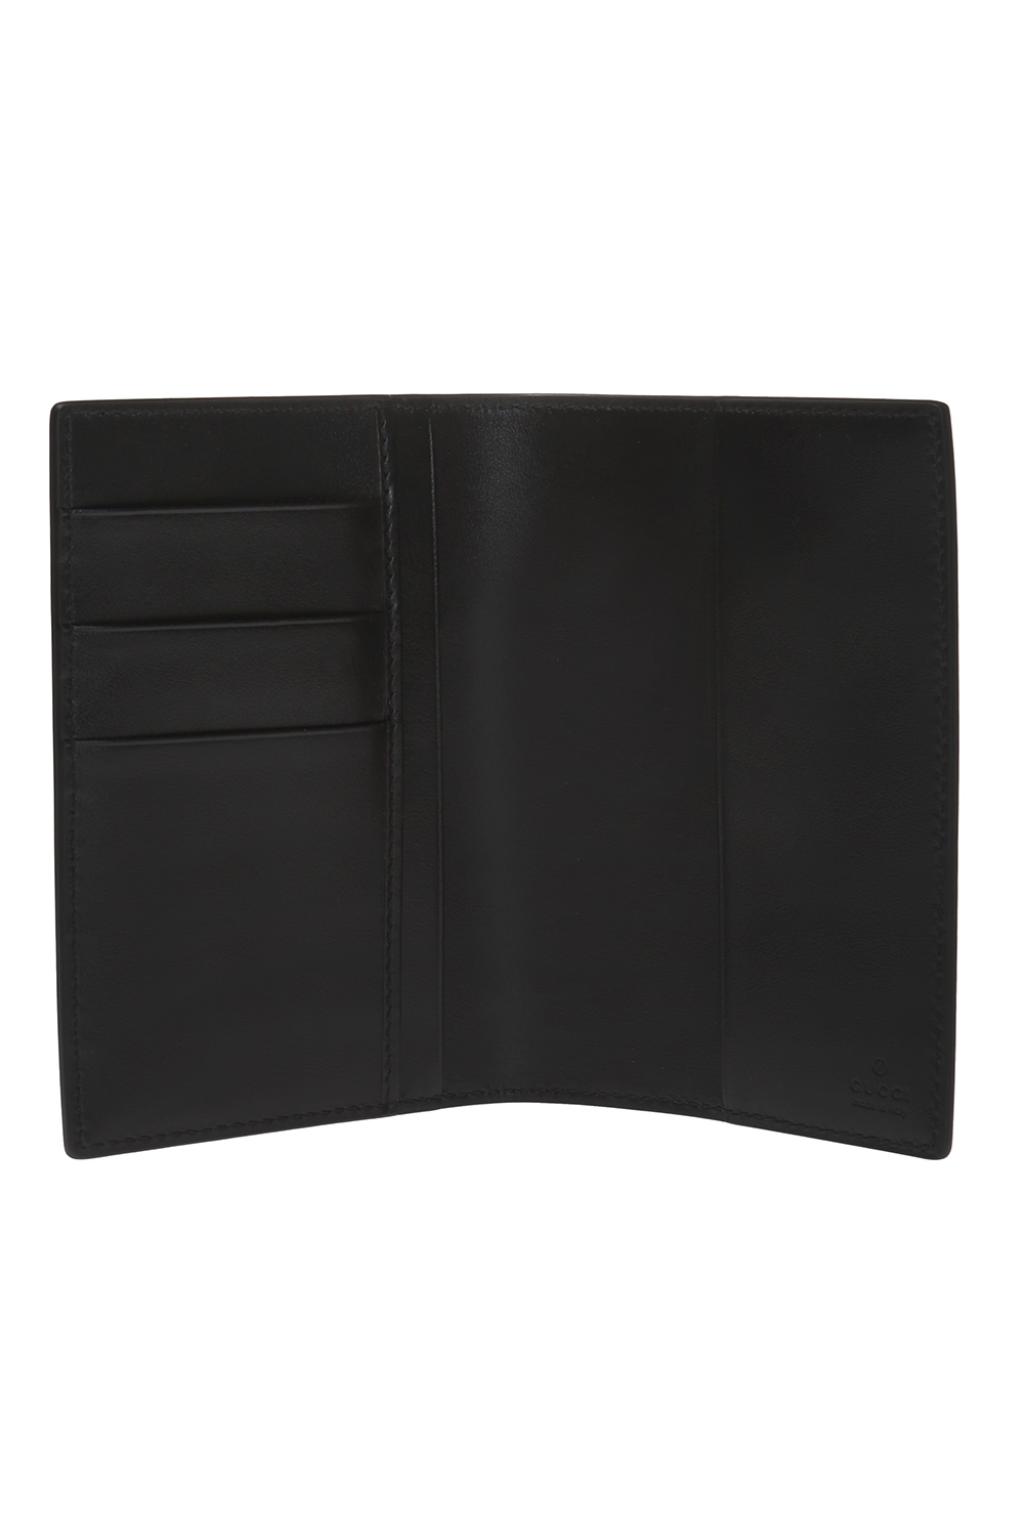 GUCCI Bi-Fold Leather Document Holder Black 547608